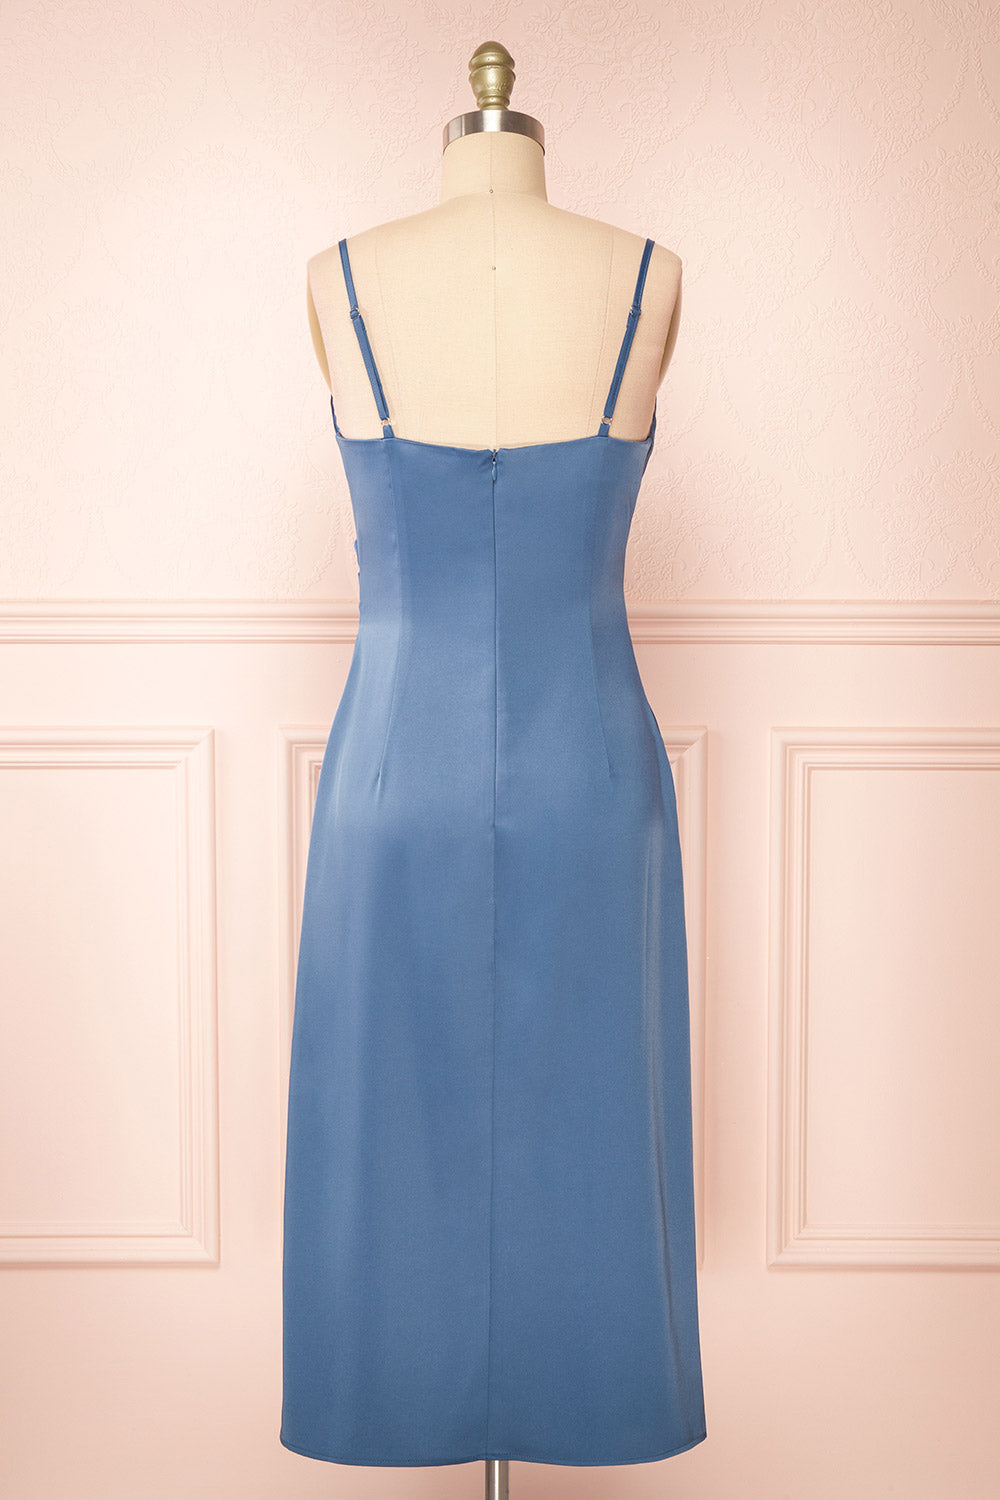 Chloe Blue Cowl Neck Satin Midi Slip Dress | Boutique 1861 back view 